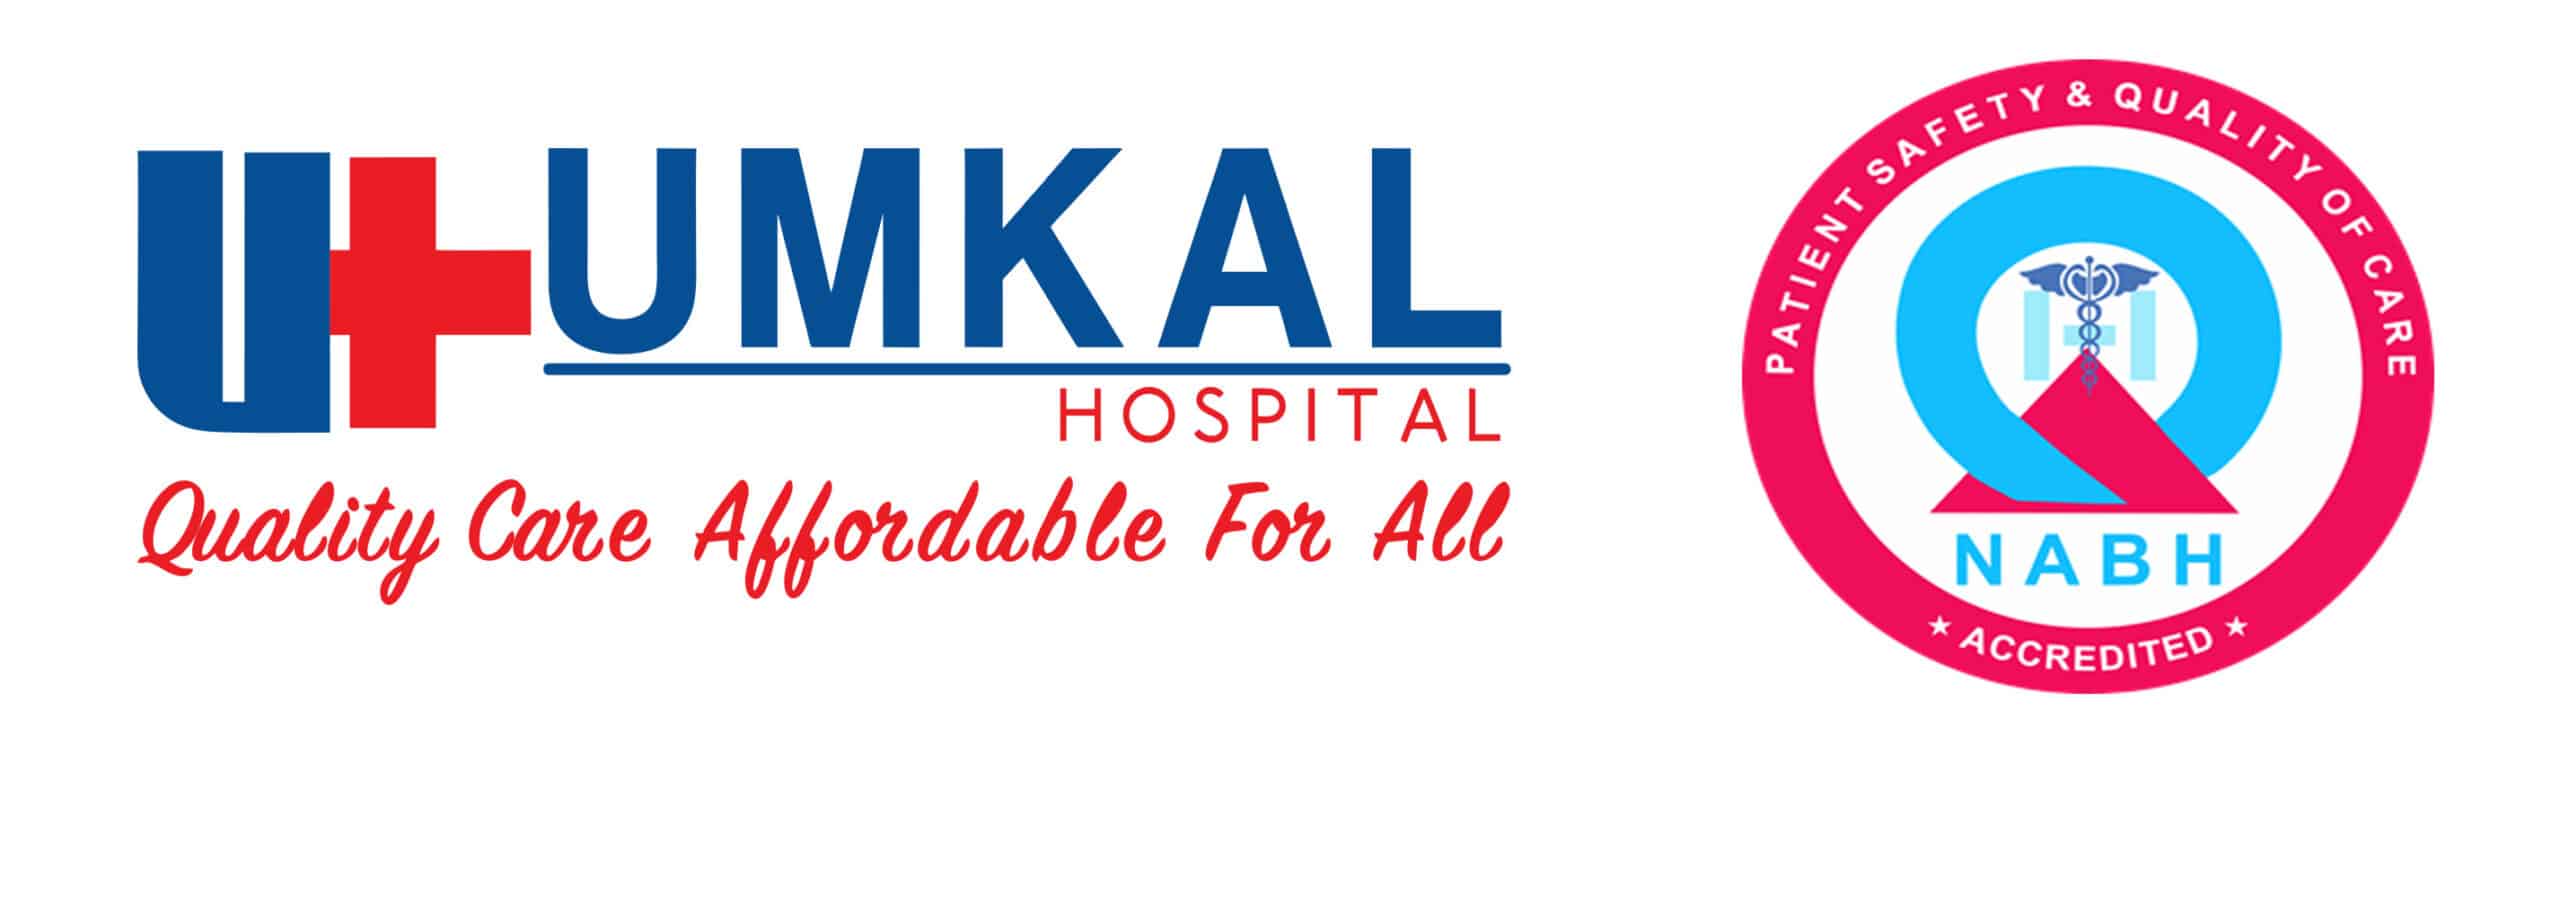 Umkal Hospital Best Hospital in Gurgaon – Multispeciality Private Hospital in Gurgaon